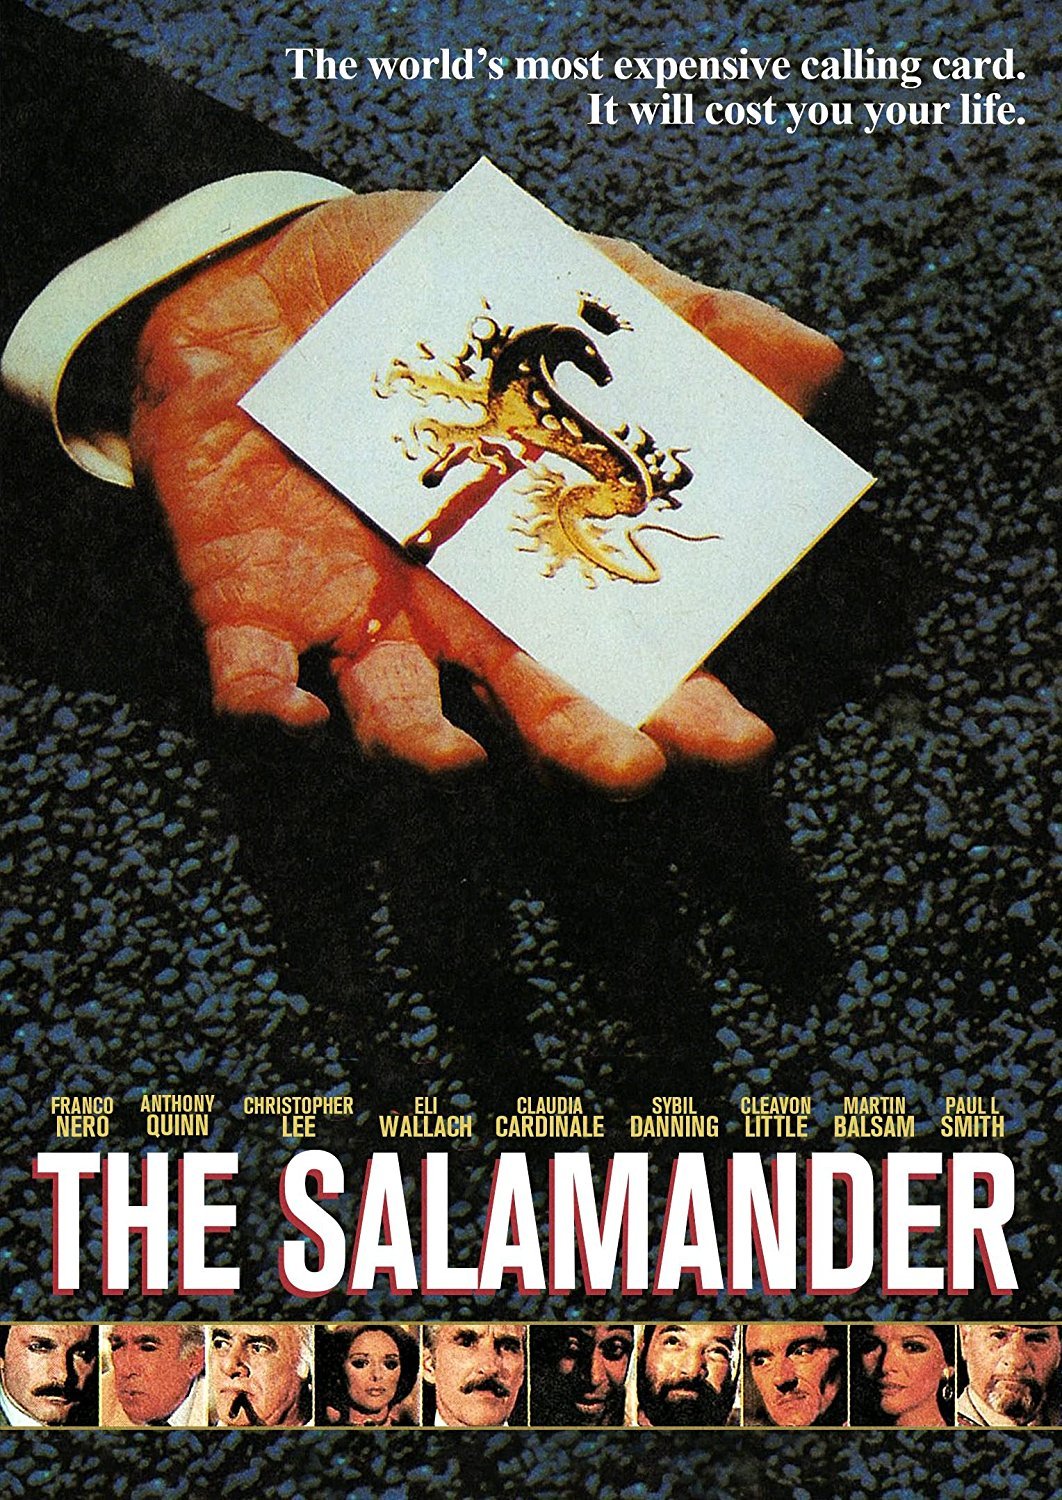 THE SALAMANDER DVD